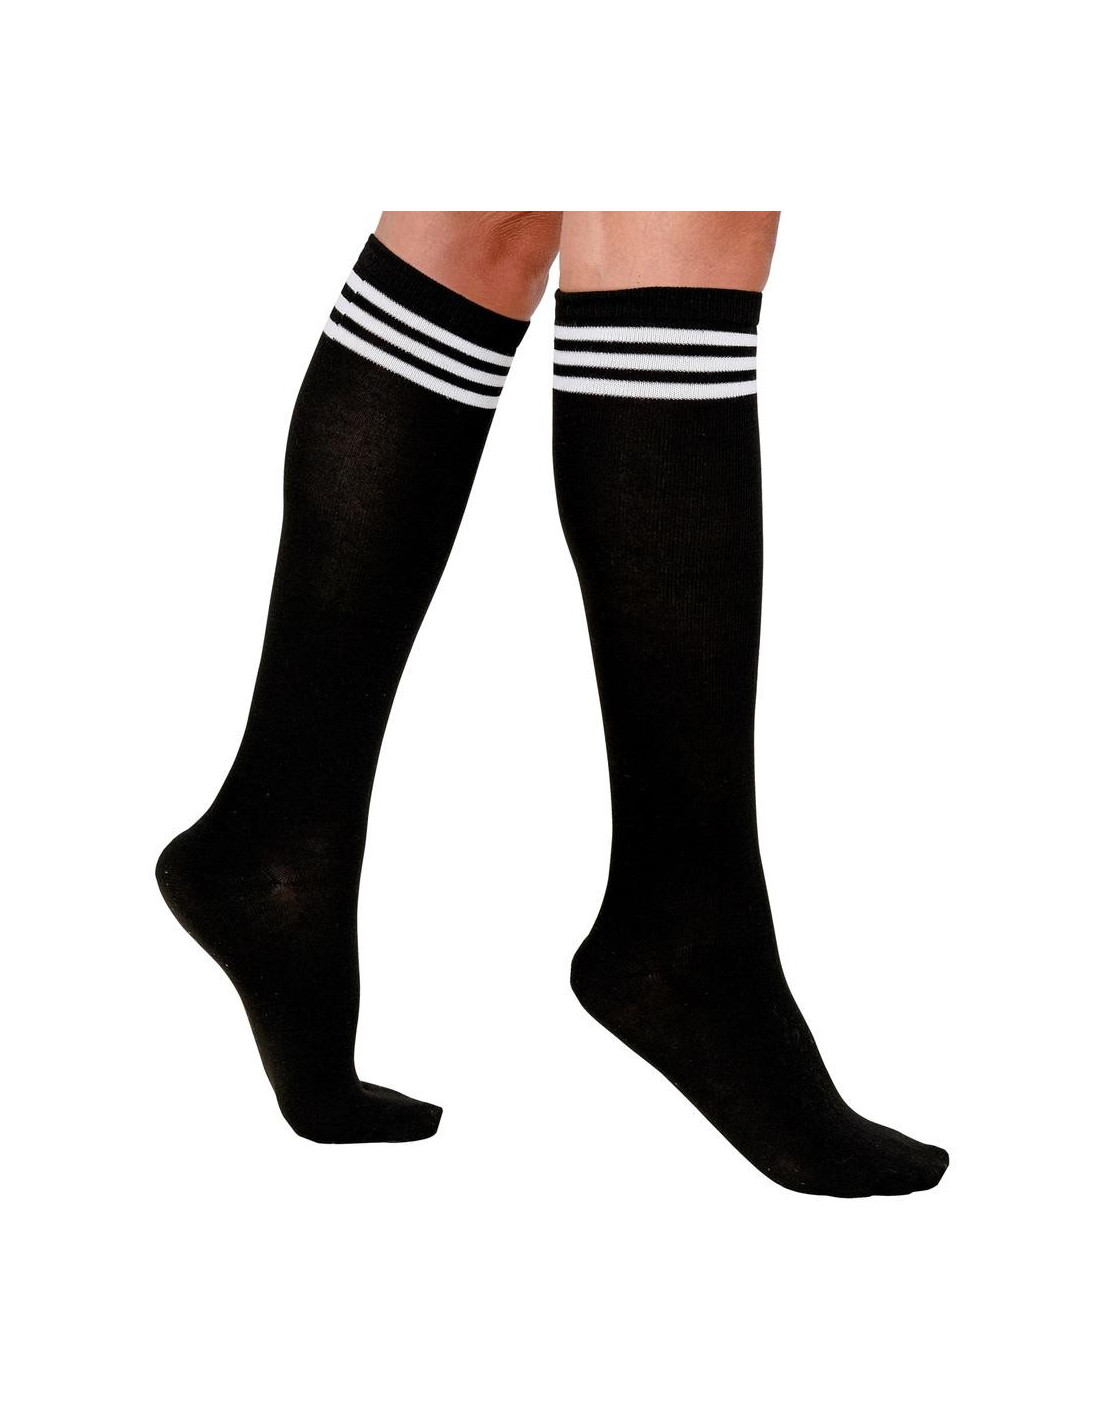 5 pares medio tubo deportivo Calcetines : 2 pares negro & blanco de rayas  Calcetines , 2 pares negro Calcetines , 1 par blanco Calcetines con negro  rayas, Moda de Mujer